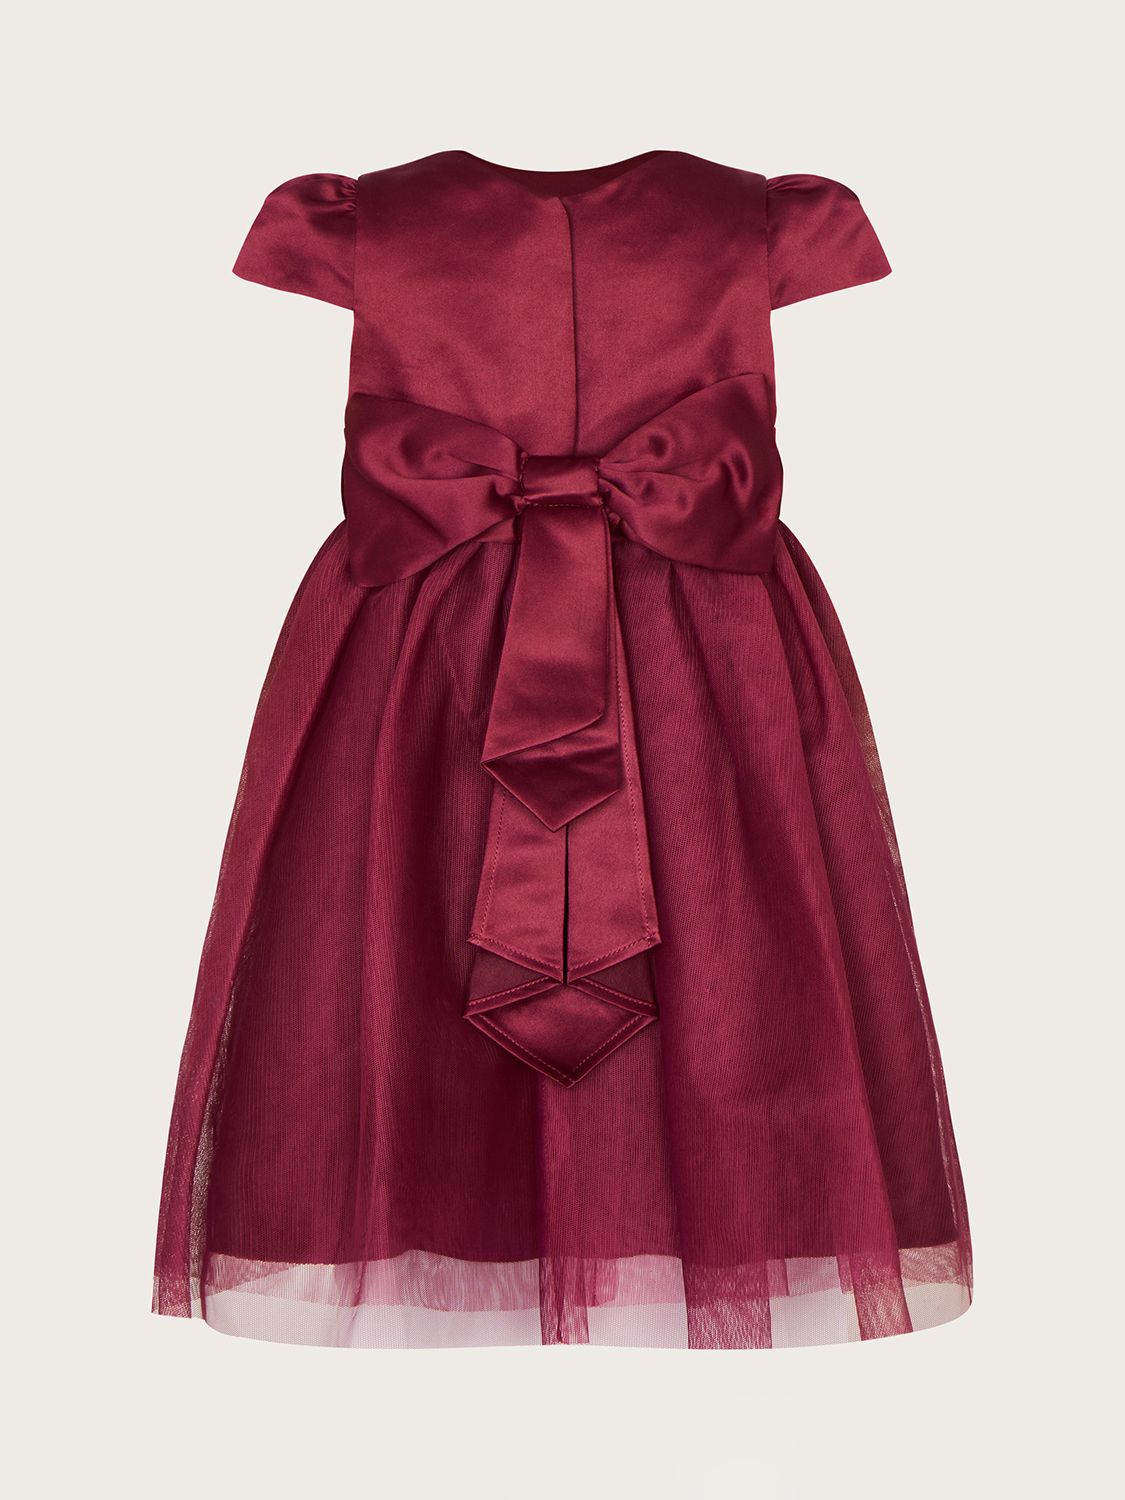 Monsoon Baby Tulle Bridesmaid Dress, Burgundy, 0-3 months